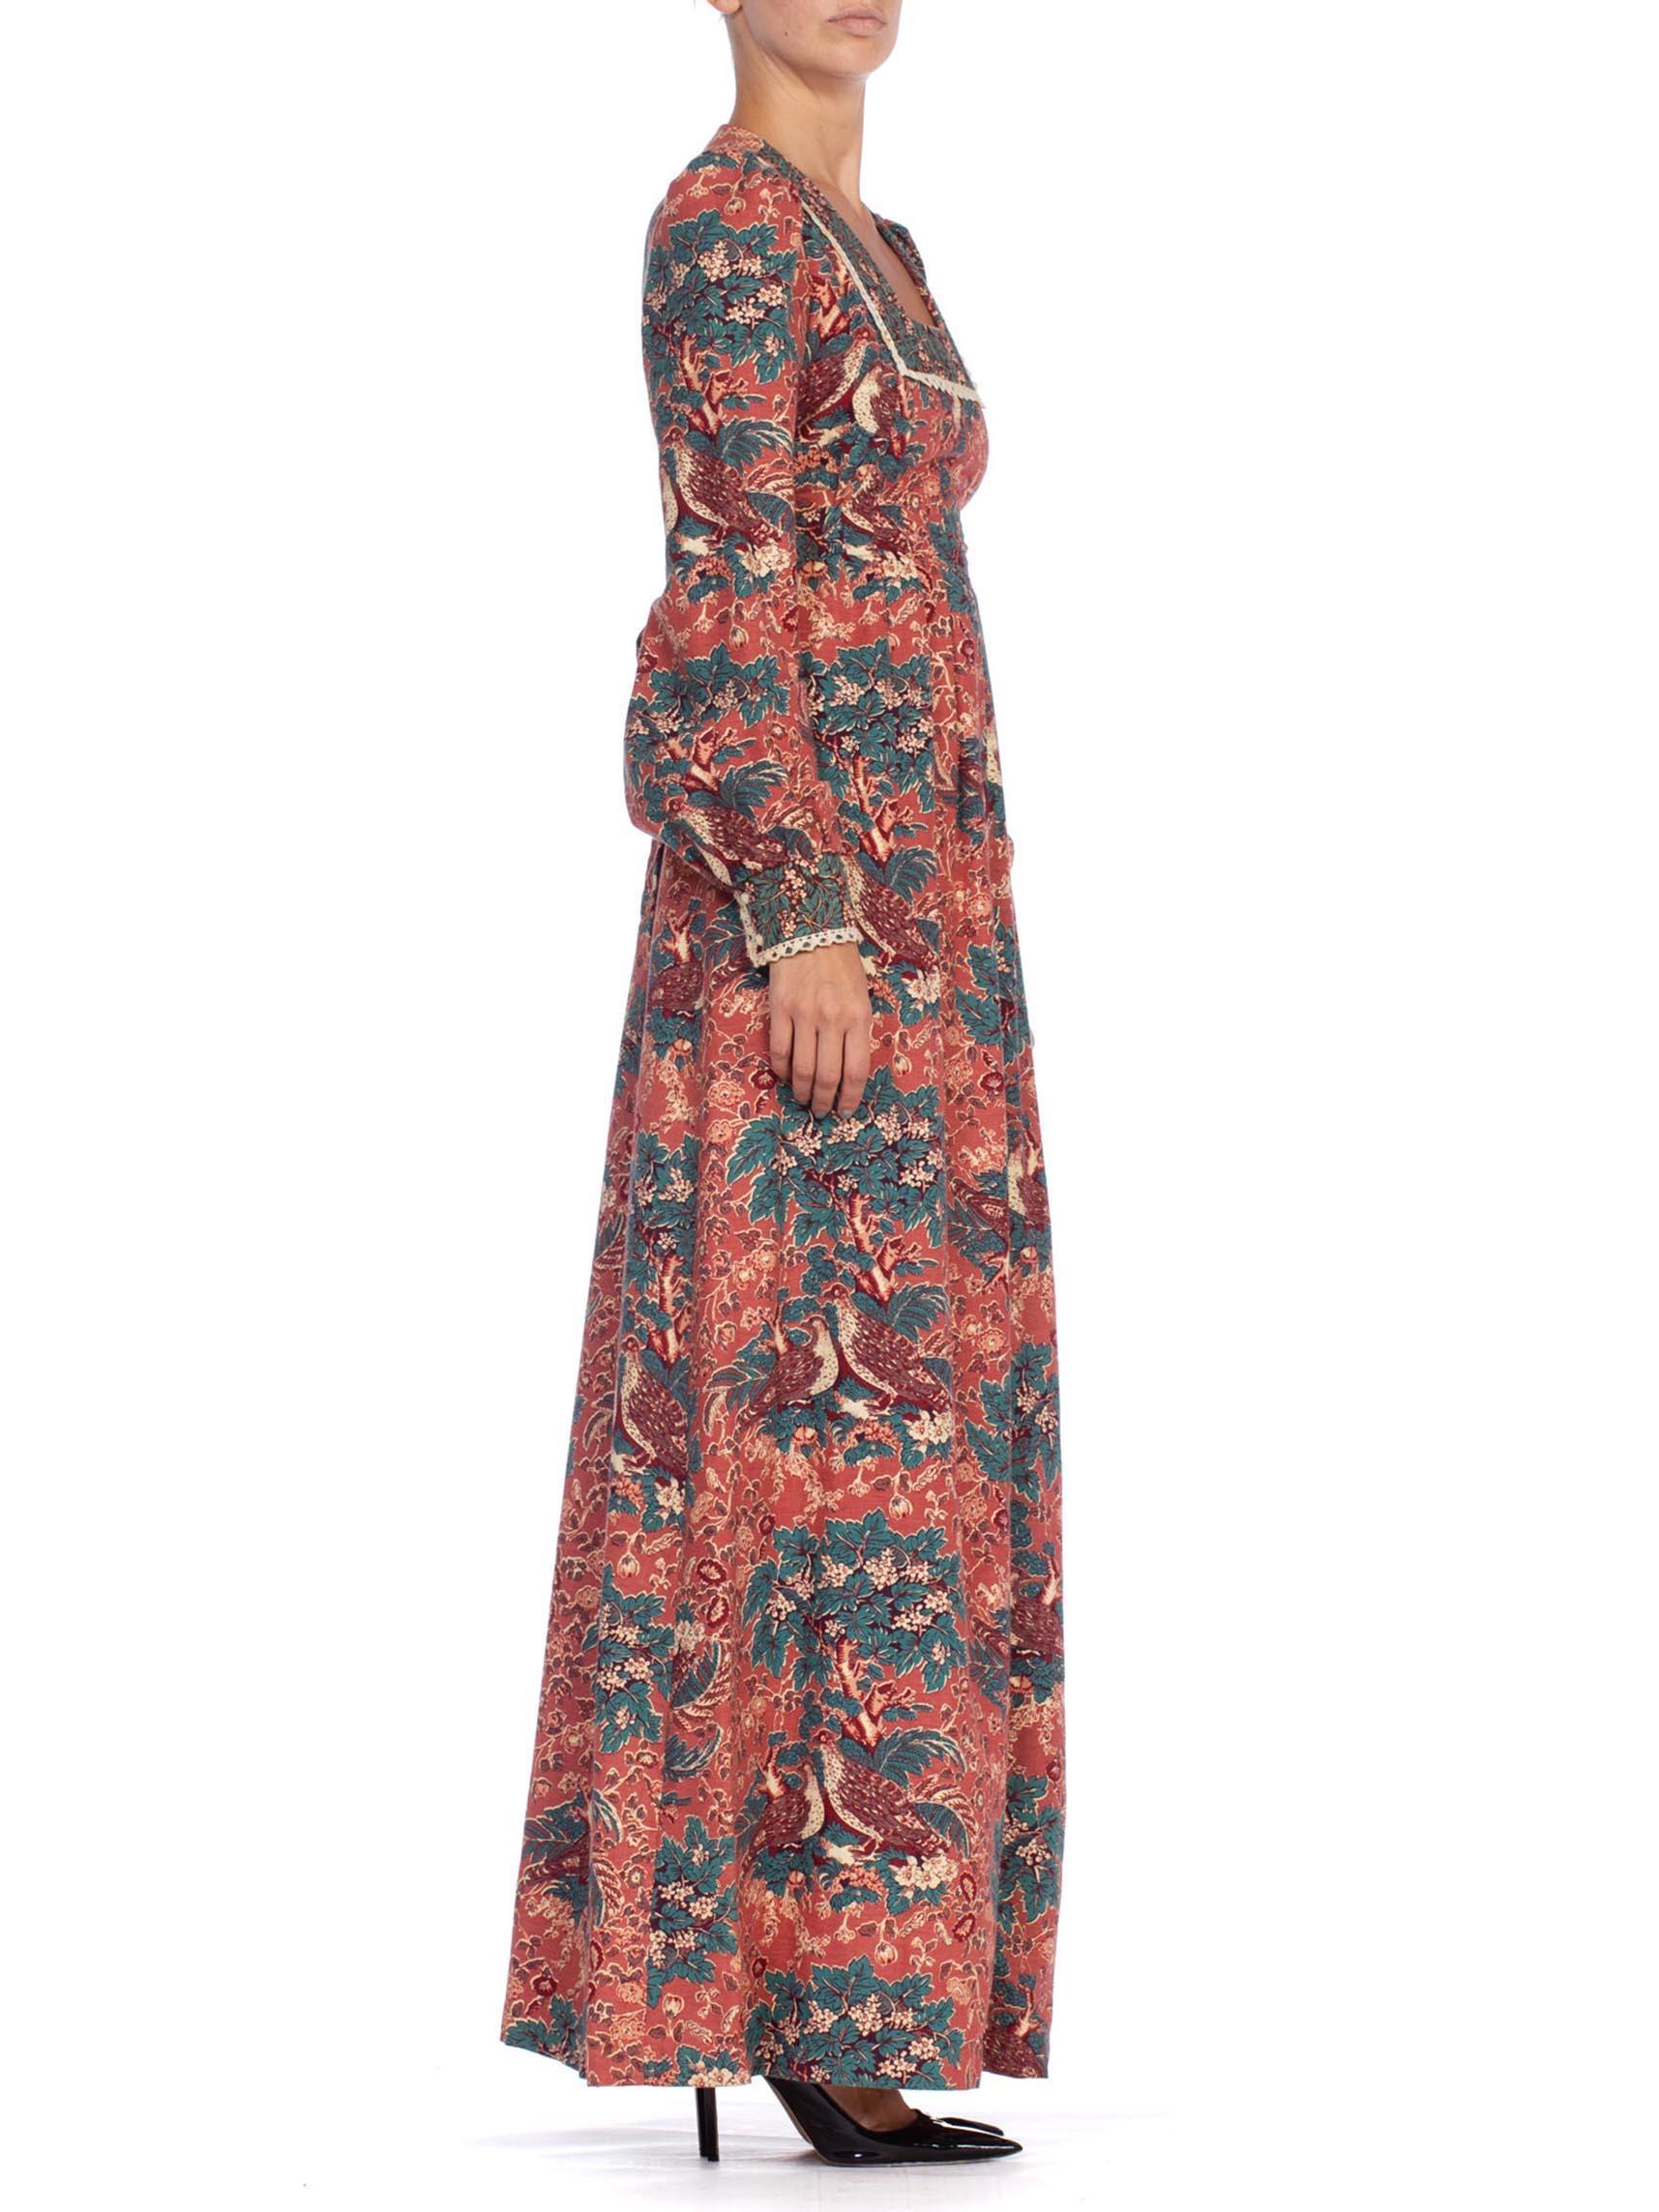 Women's 1970'S Floral Cotton Victorian Style Boho Dress